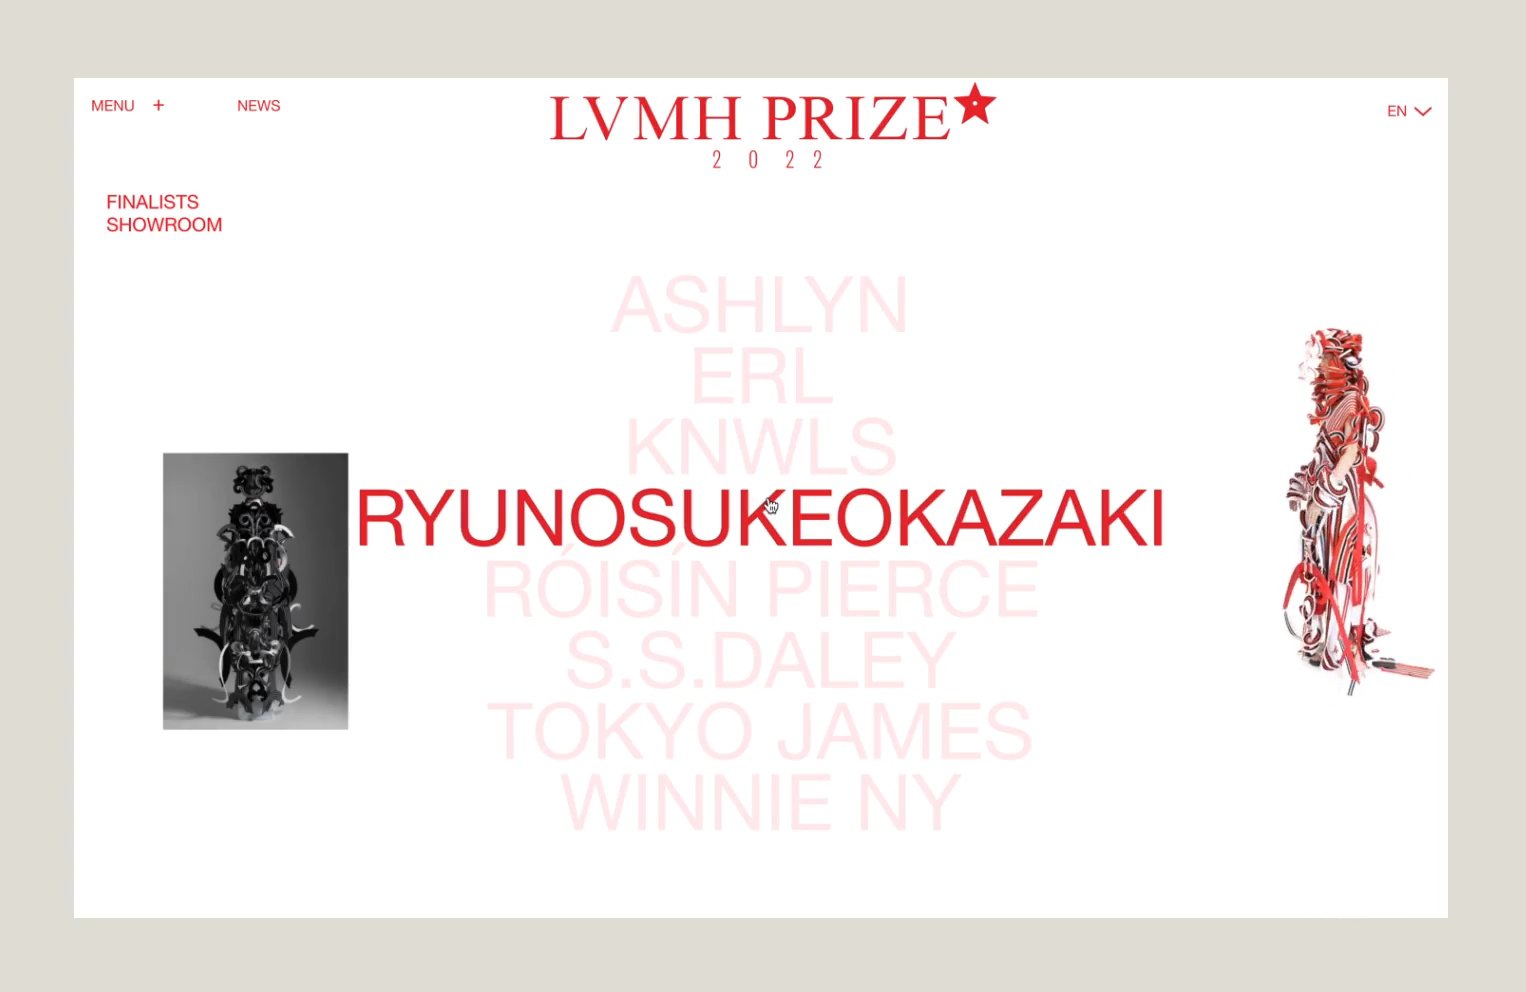 Winnie New York & Tokyo James - LVMH Prize 2022 Semi Finalist Interview